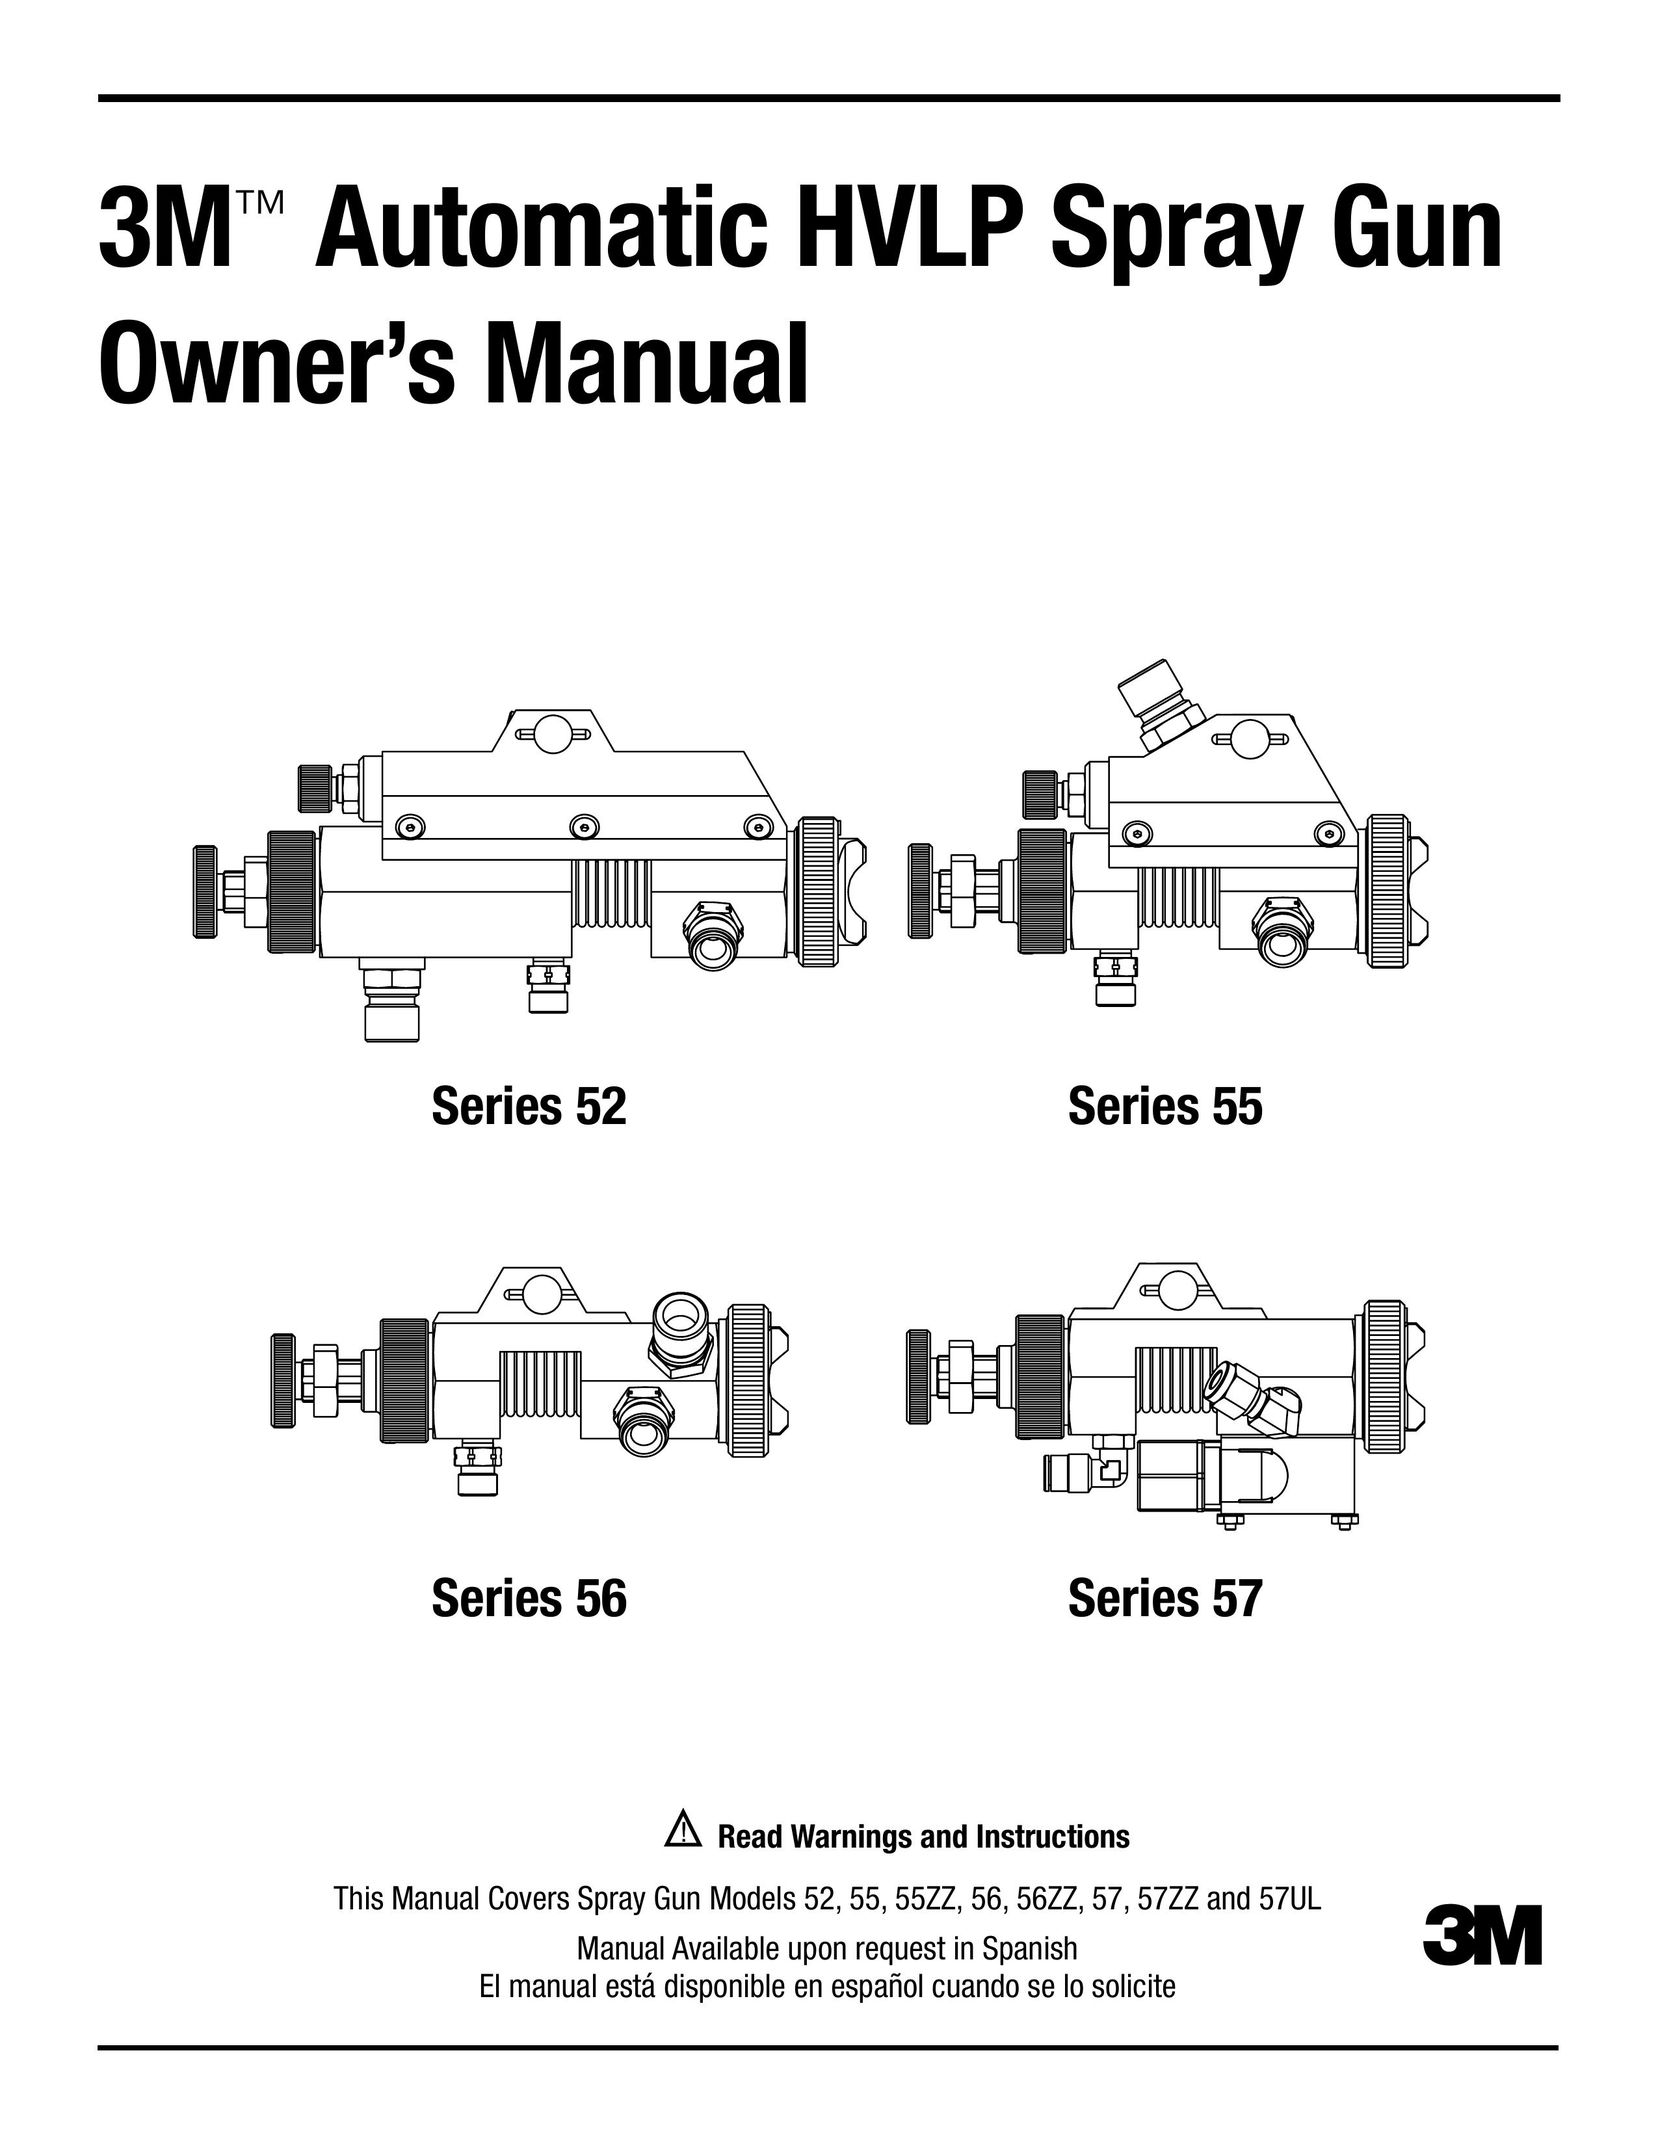 3M Series 56 Paint Sprayer User Manual